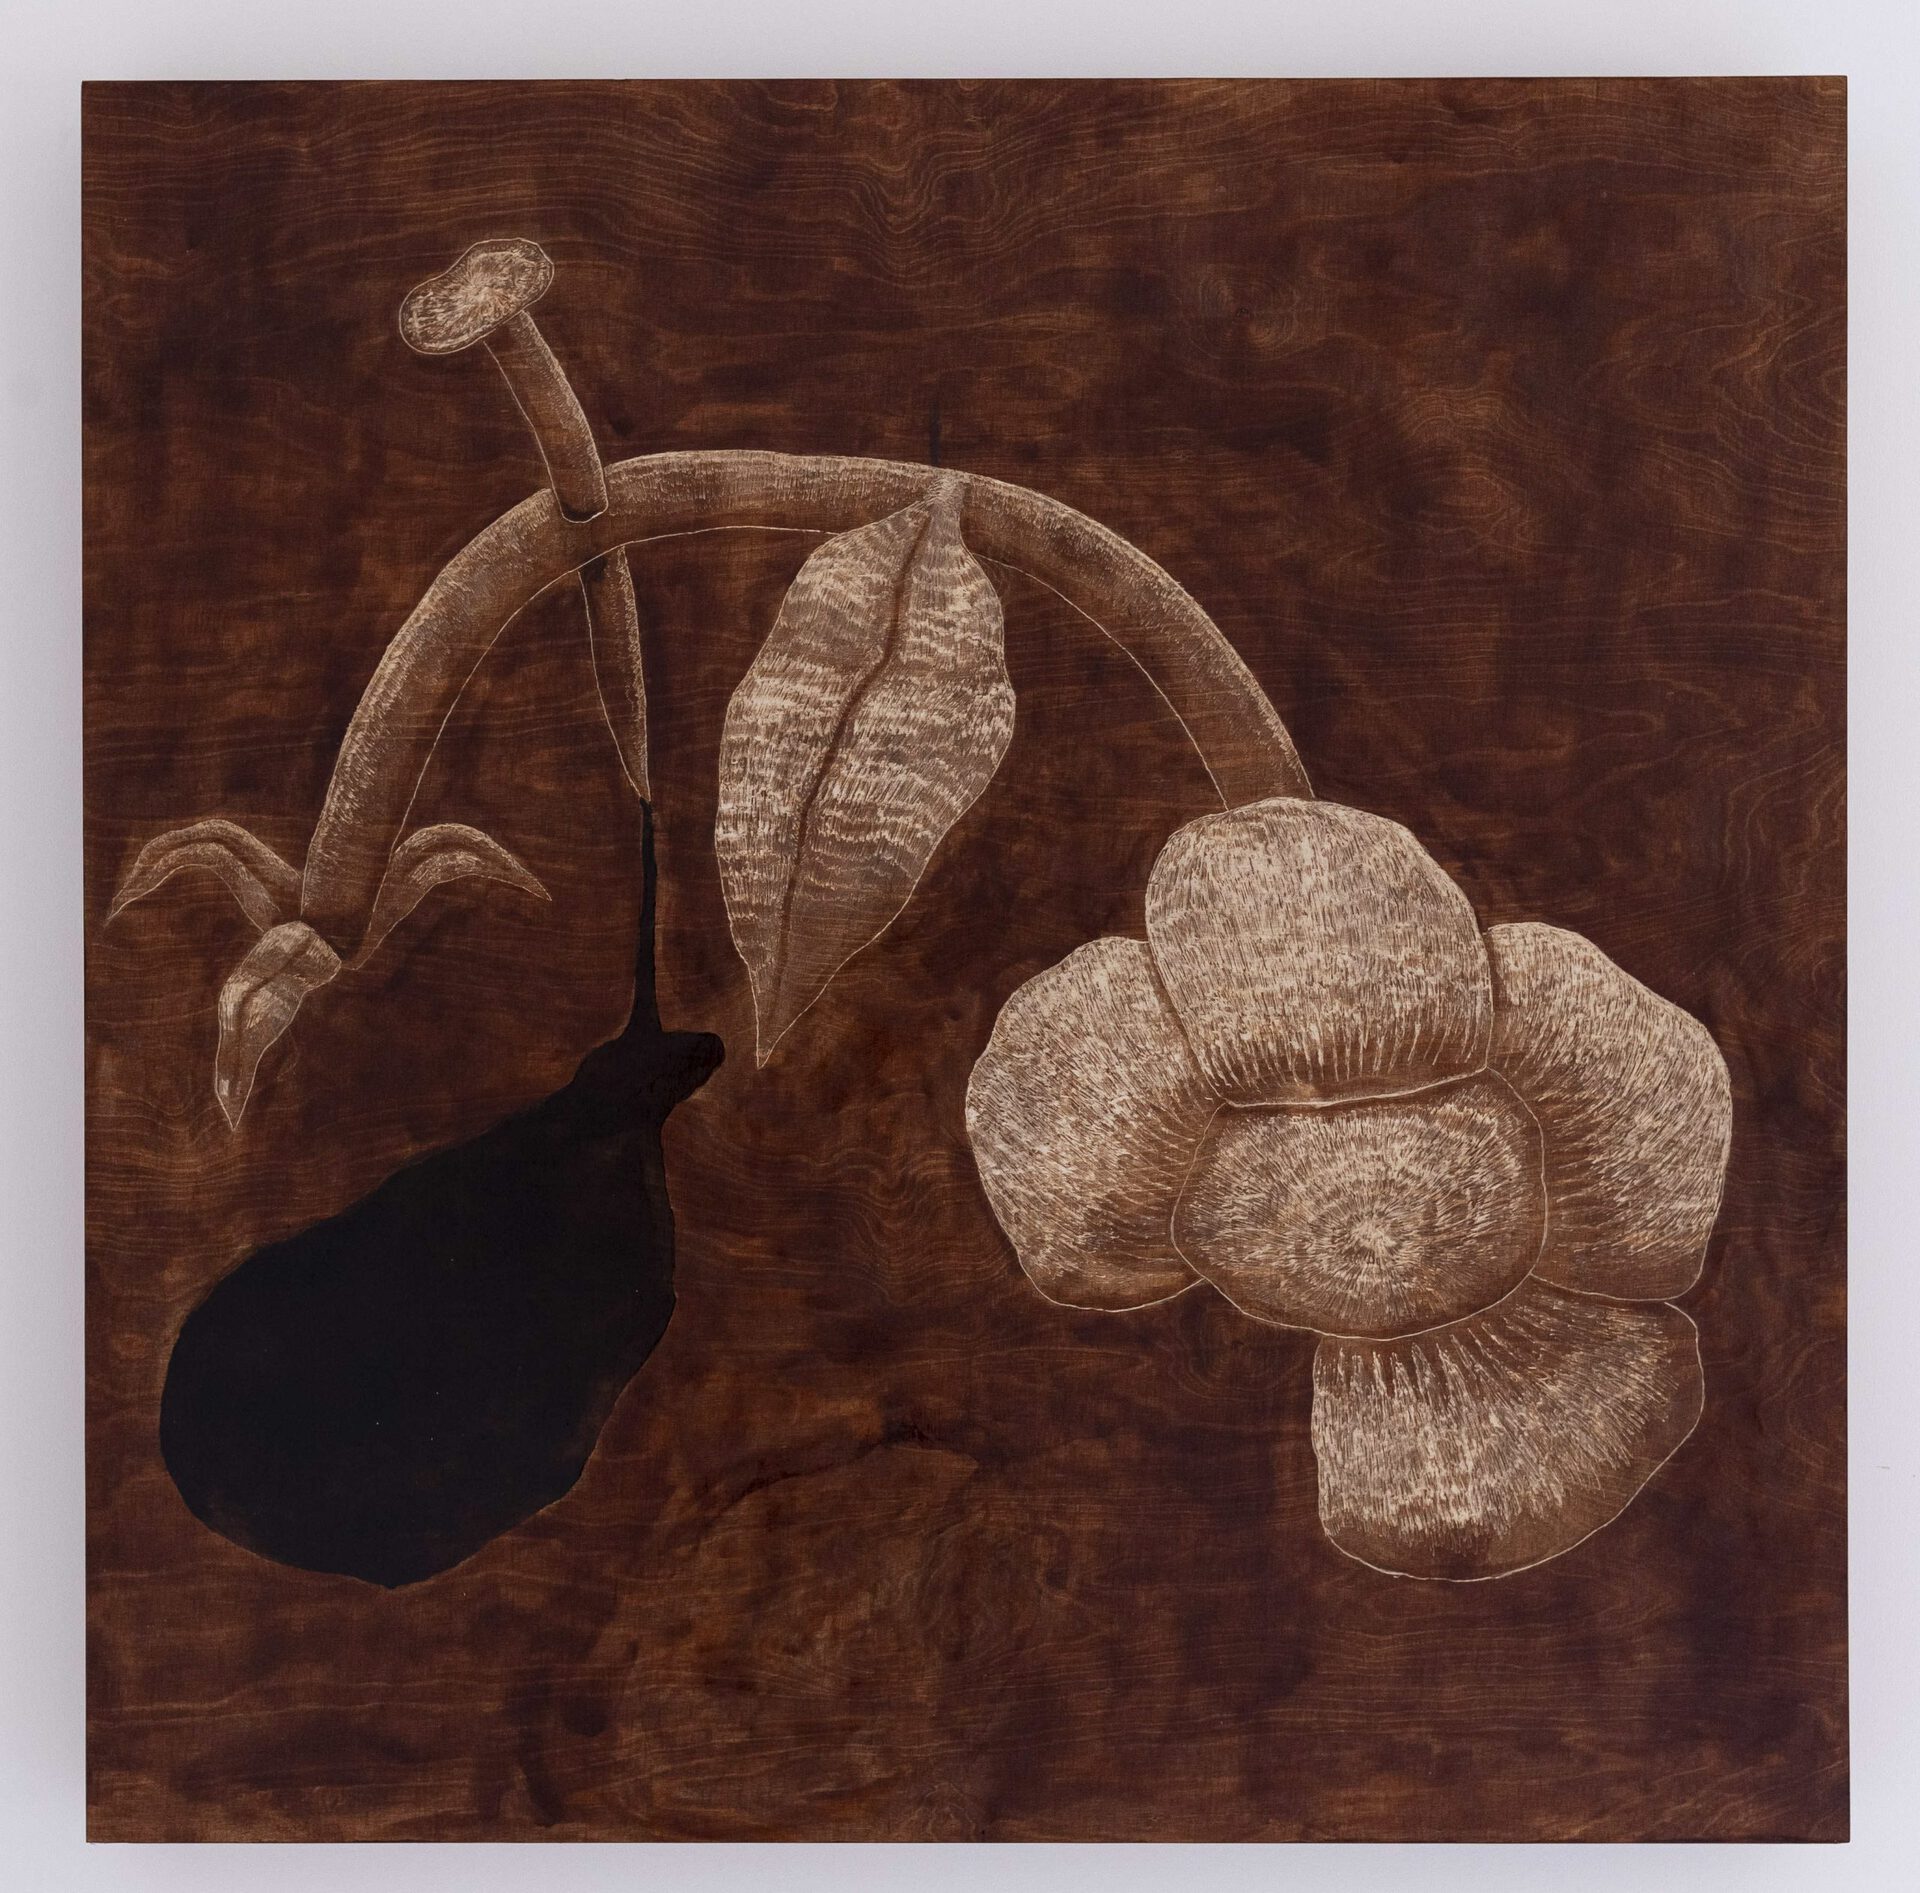 Orfeo Tagiuri, Dying Flower, 2021, Wood Engraving, 121 x 10 x 121 cm